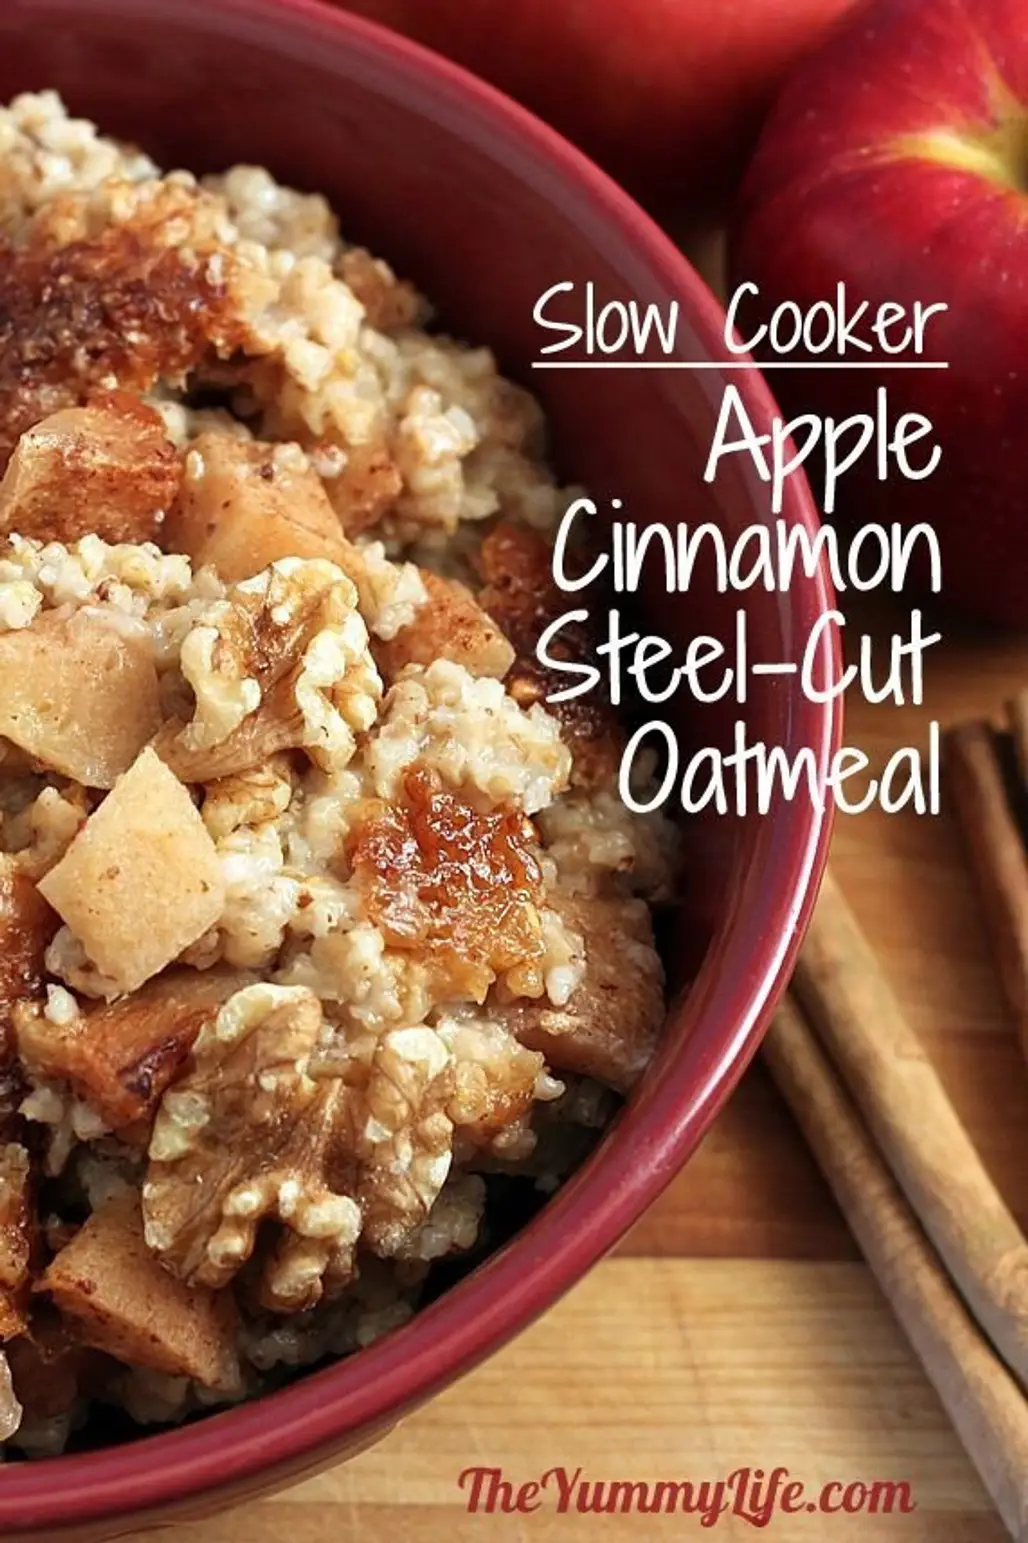 Overnight, Slow Cooker, Apple Cinnamon Steel-Cut Oatmeal